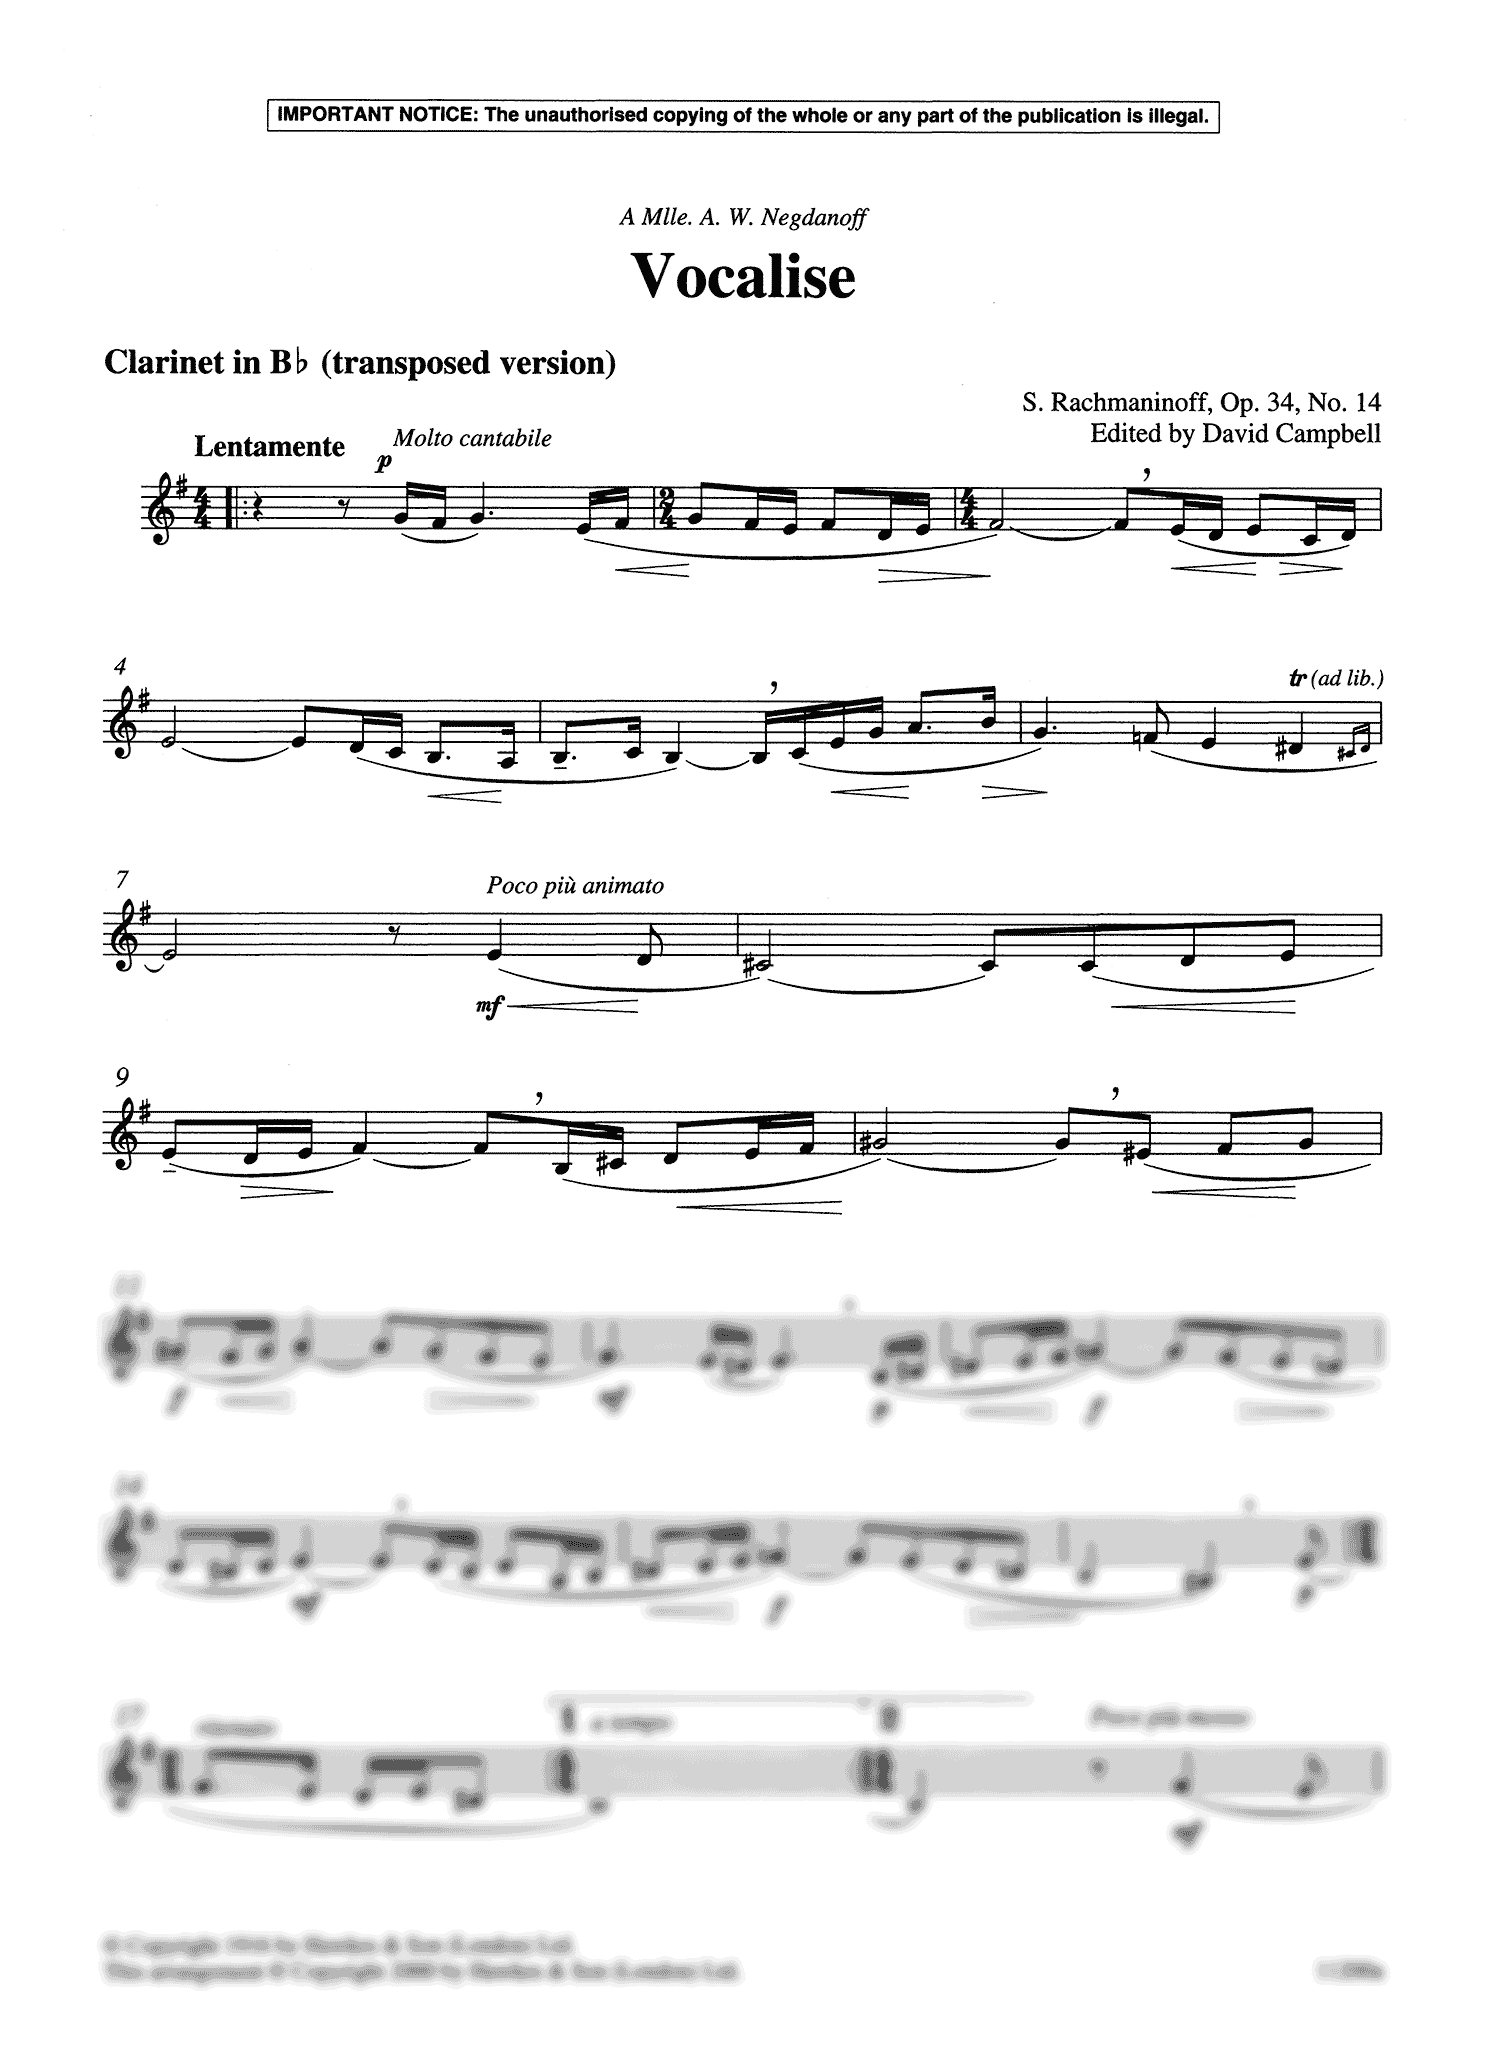 Rachmaninoff Vocalise clarinet part transposed